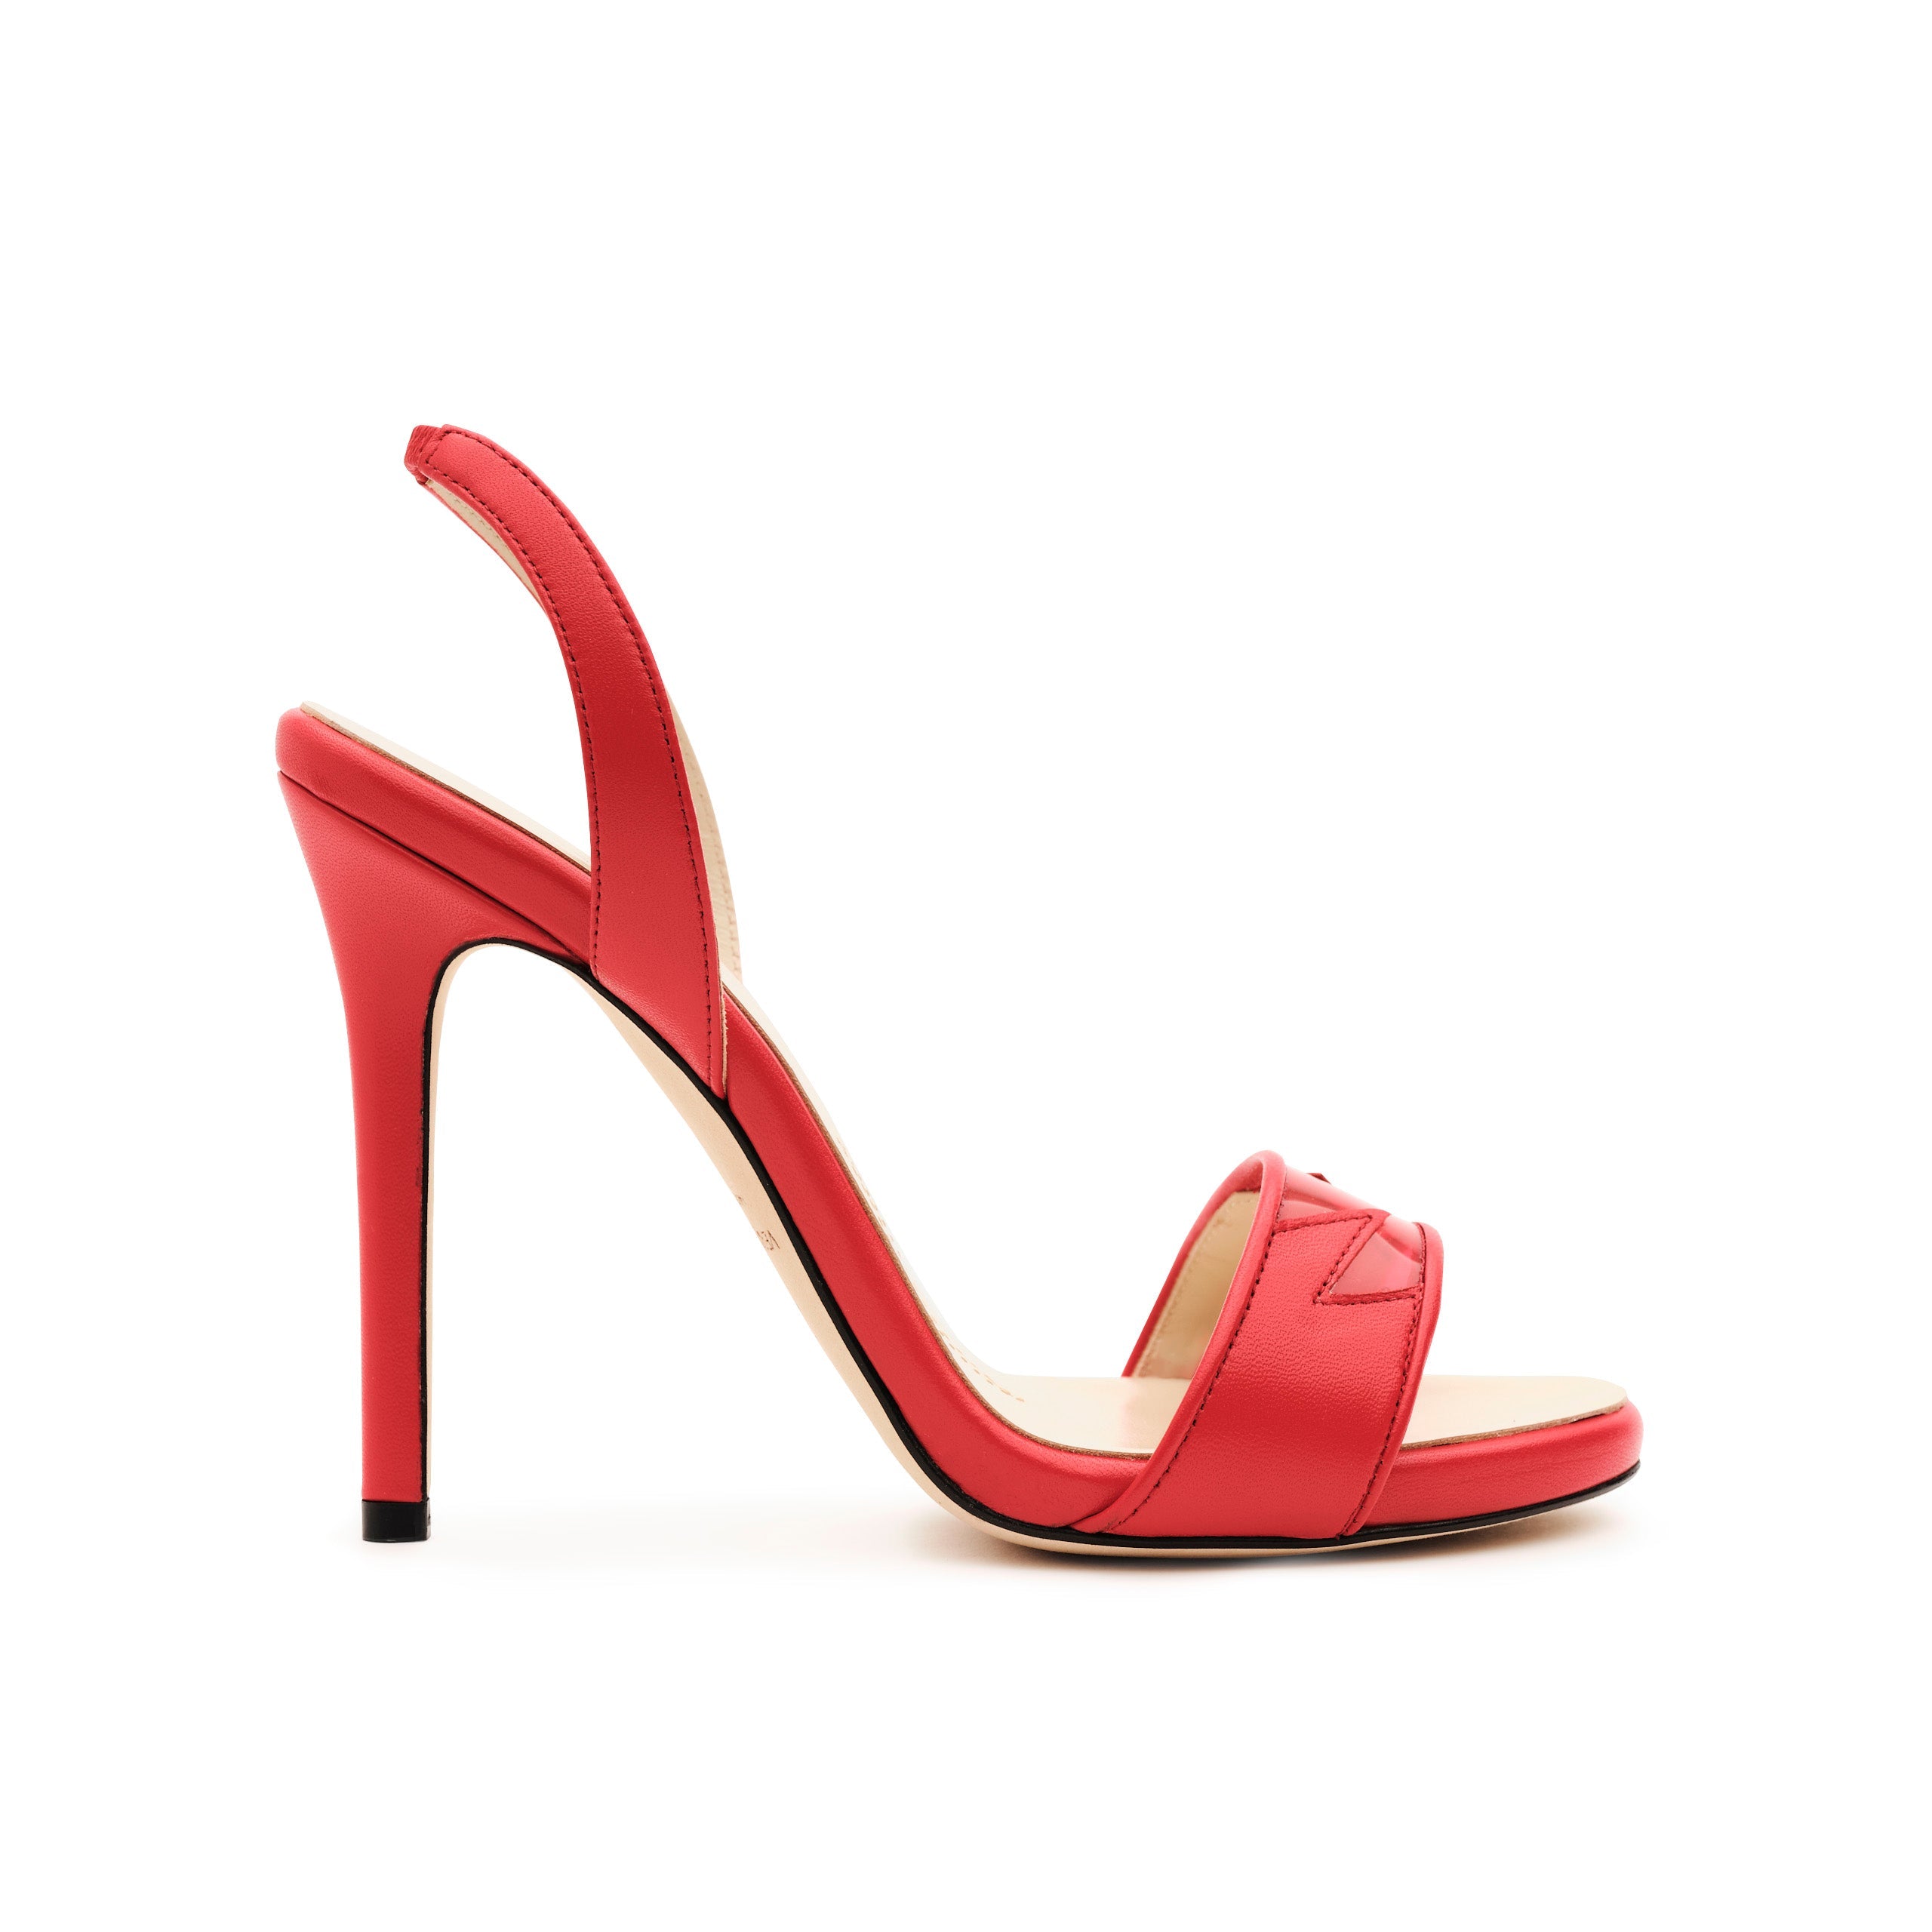 Giselle - Red Open-Toe High Heels - Tiannia Barnes